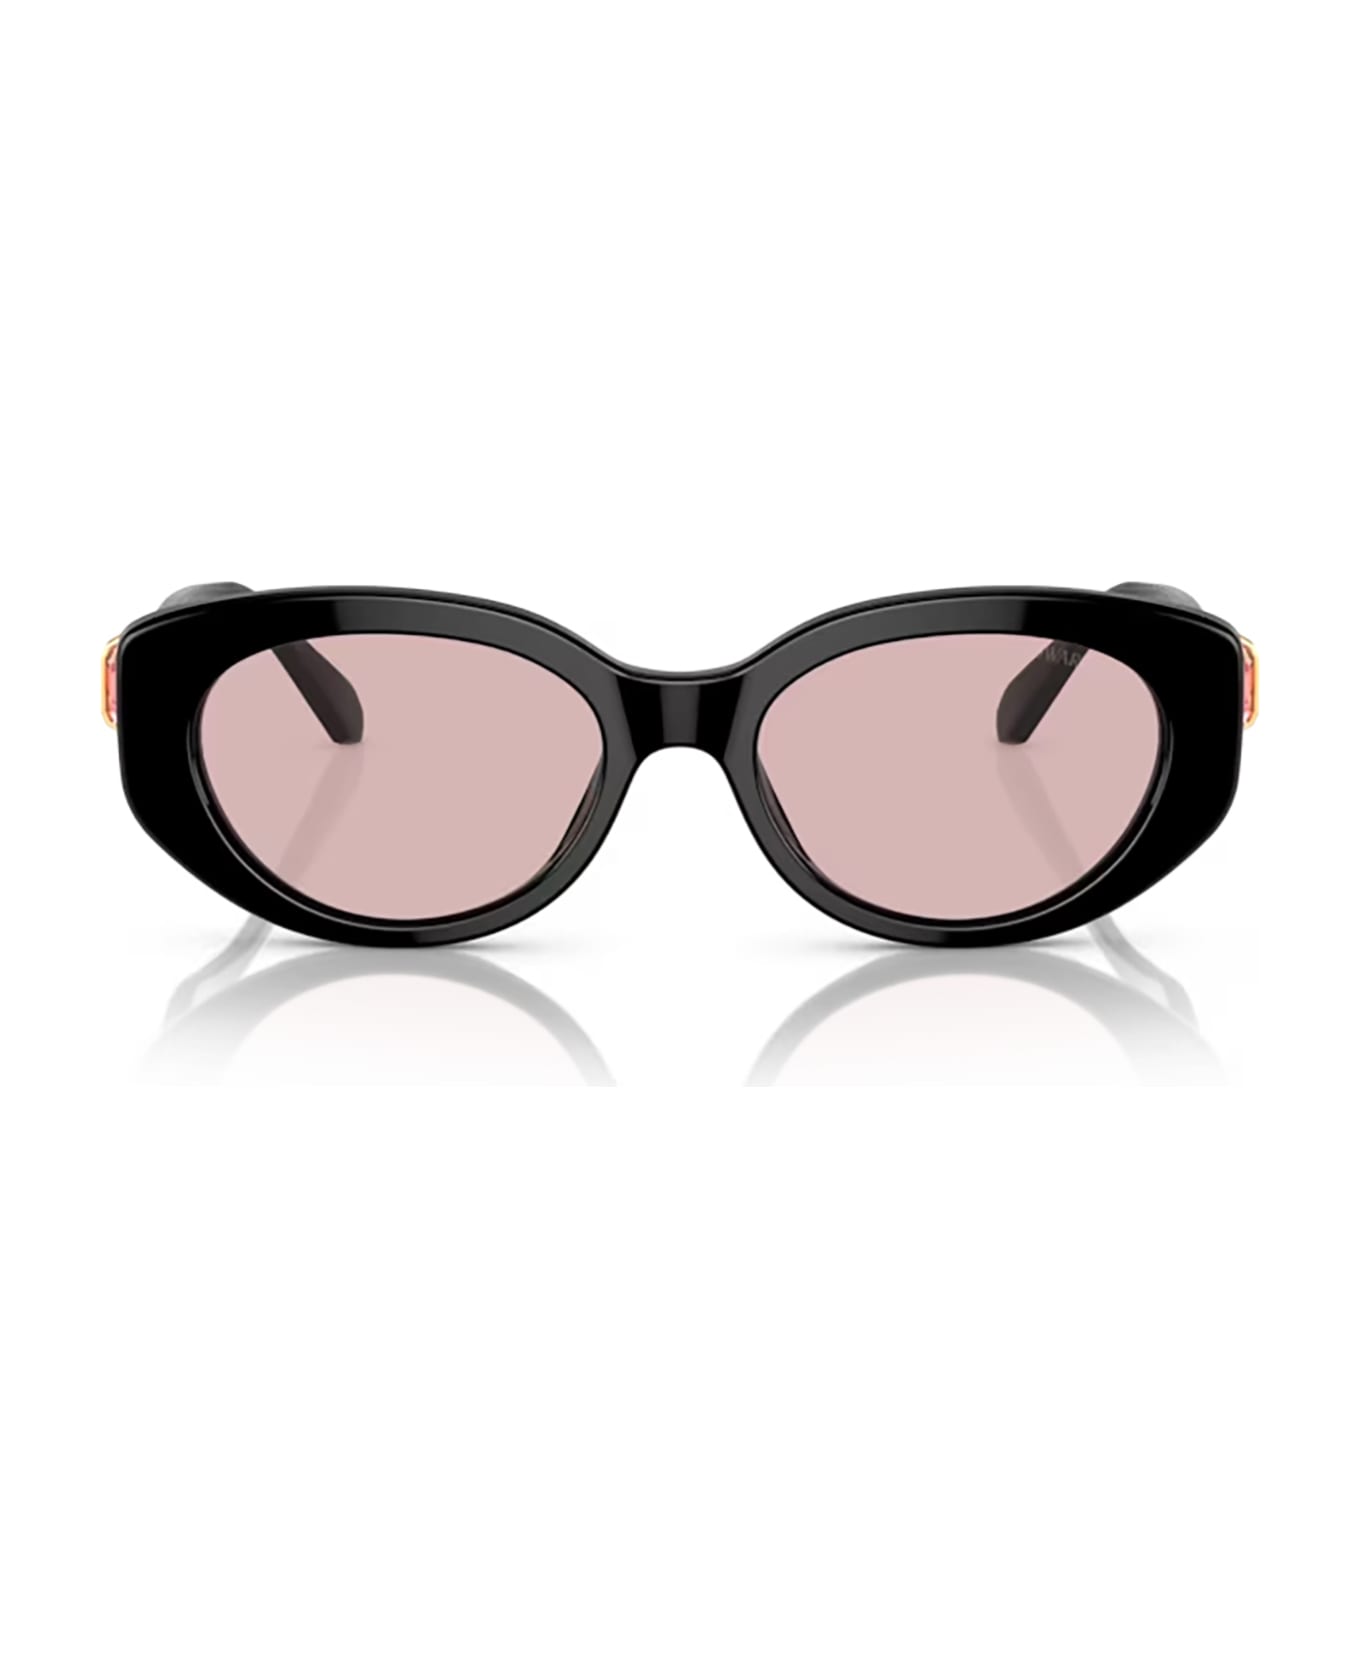 Swarovski Sk6002 Black Sunglasses - Black